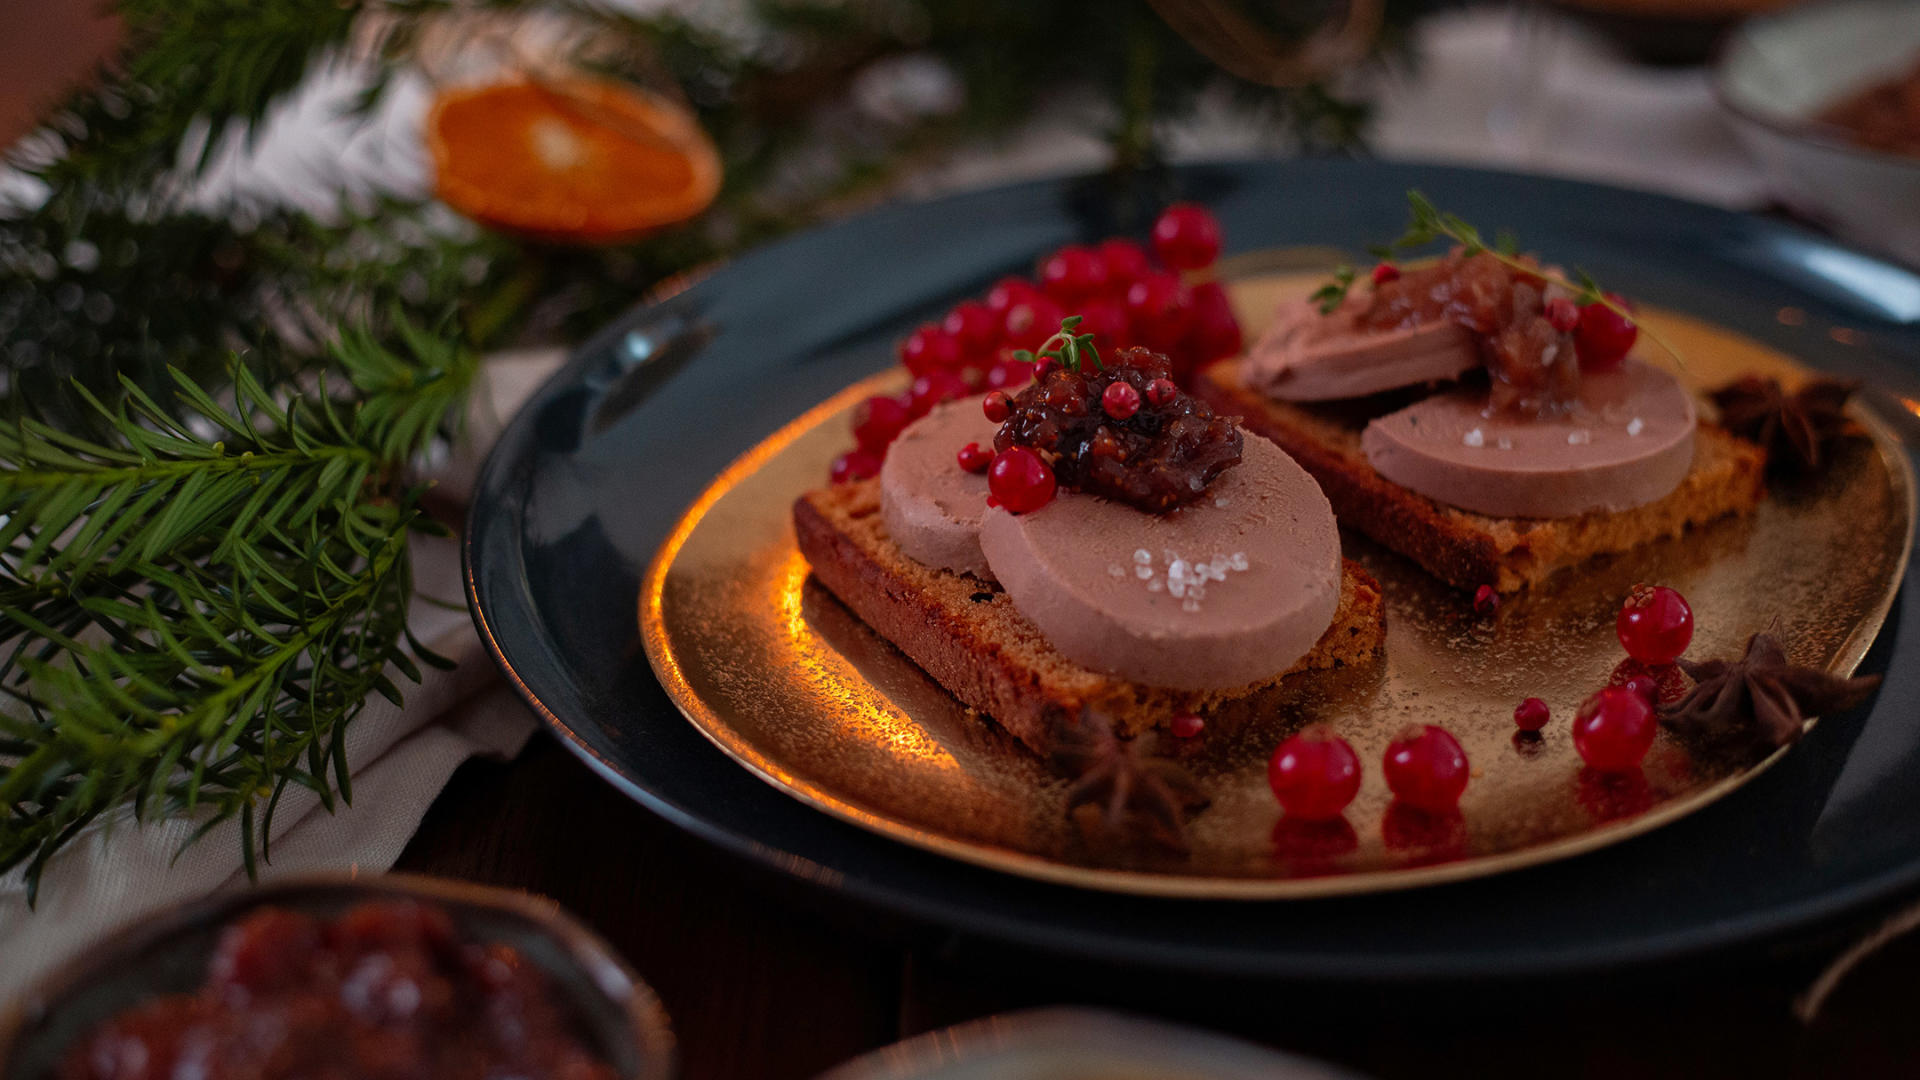 Festive plate with foie gras